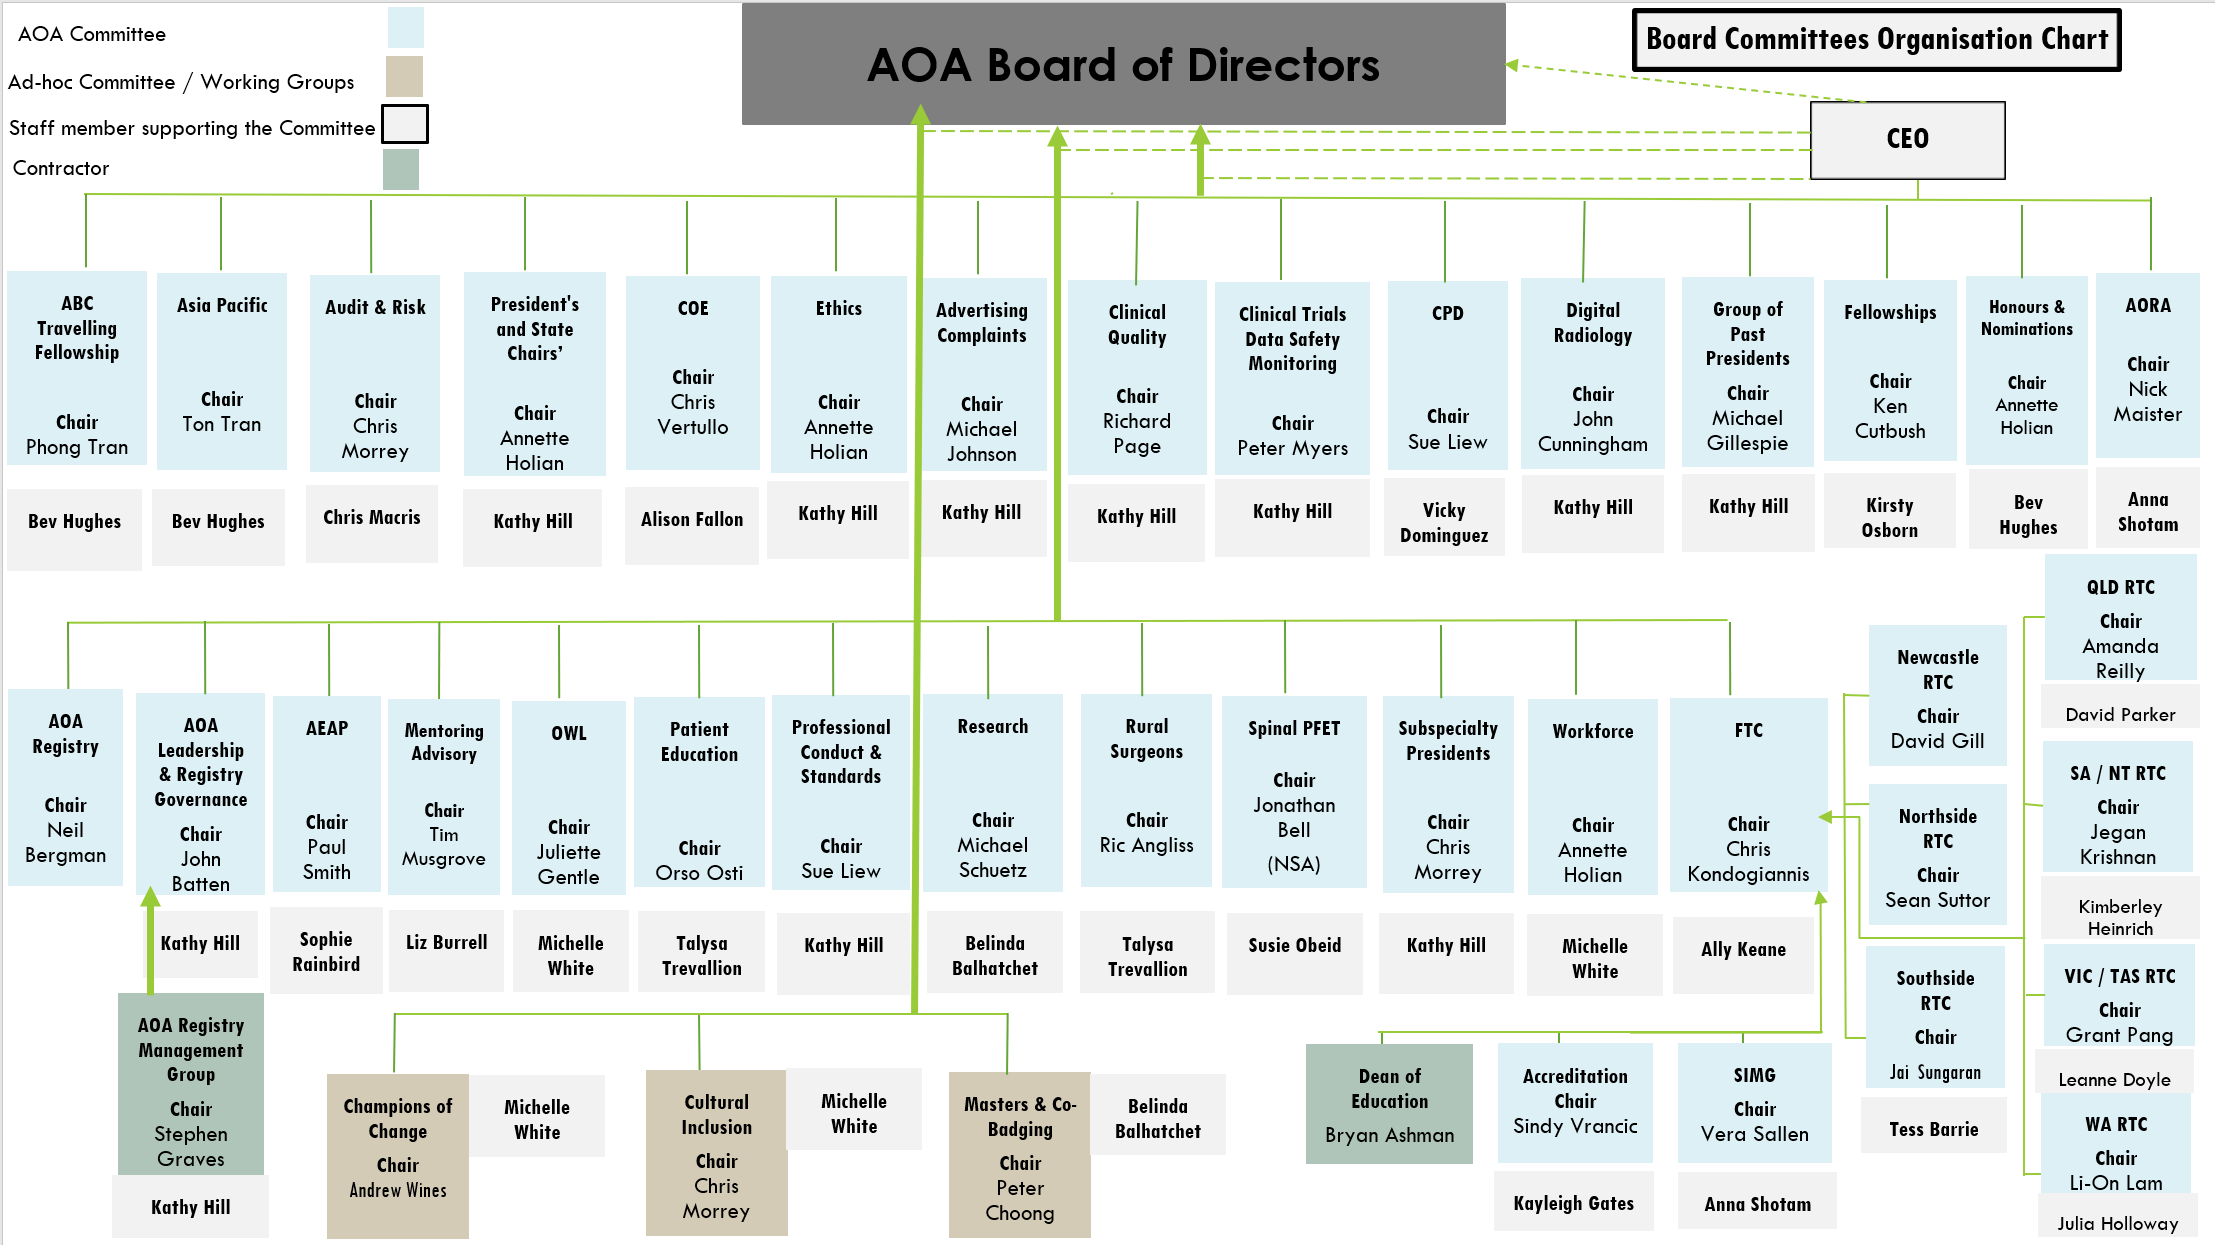 AOA Committee Organisation Chart_04042022